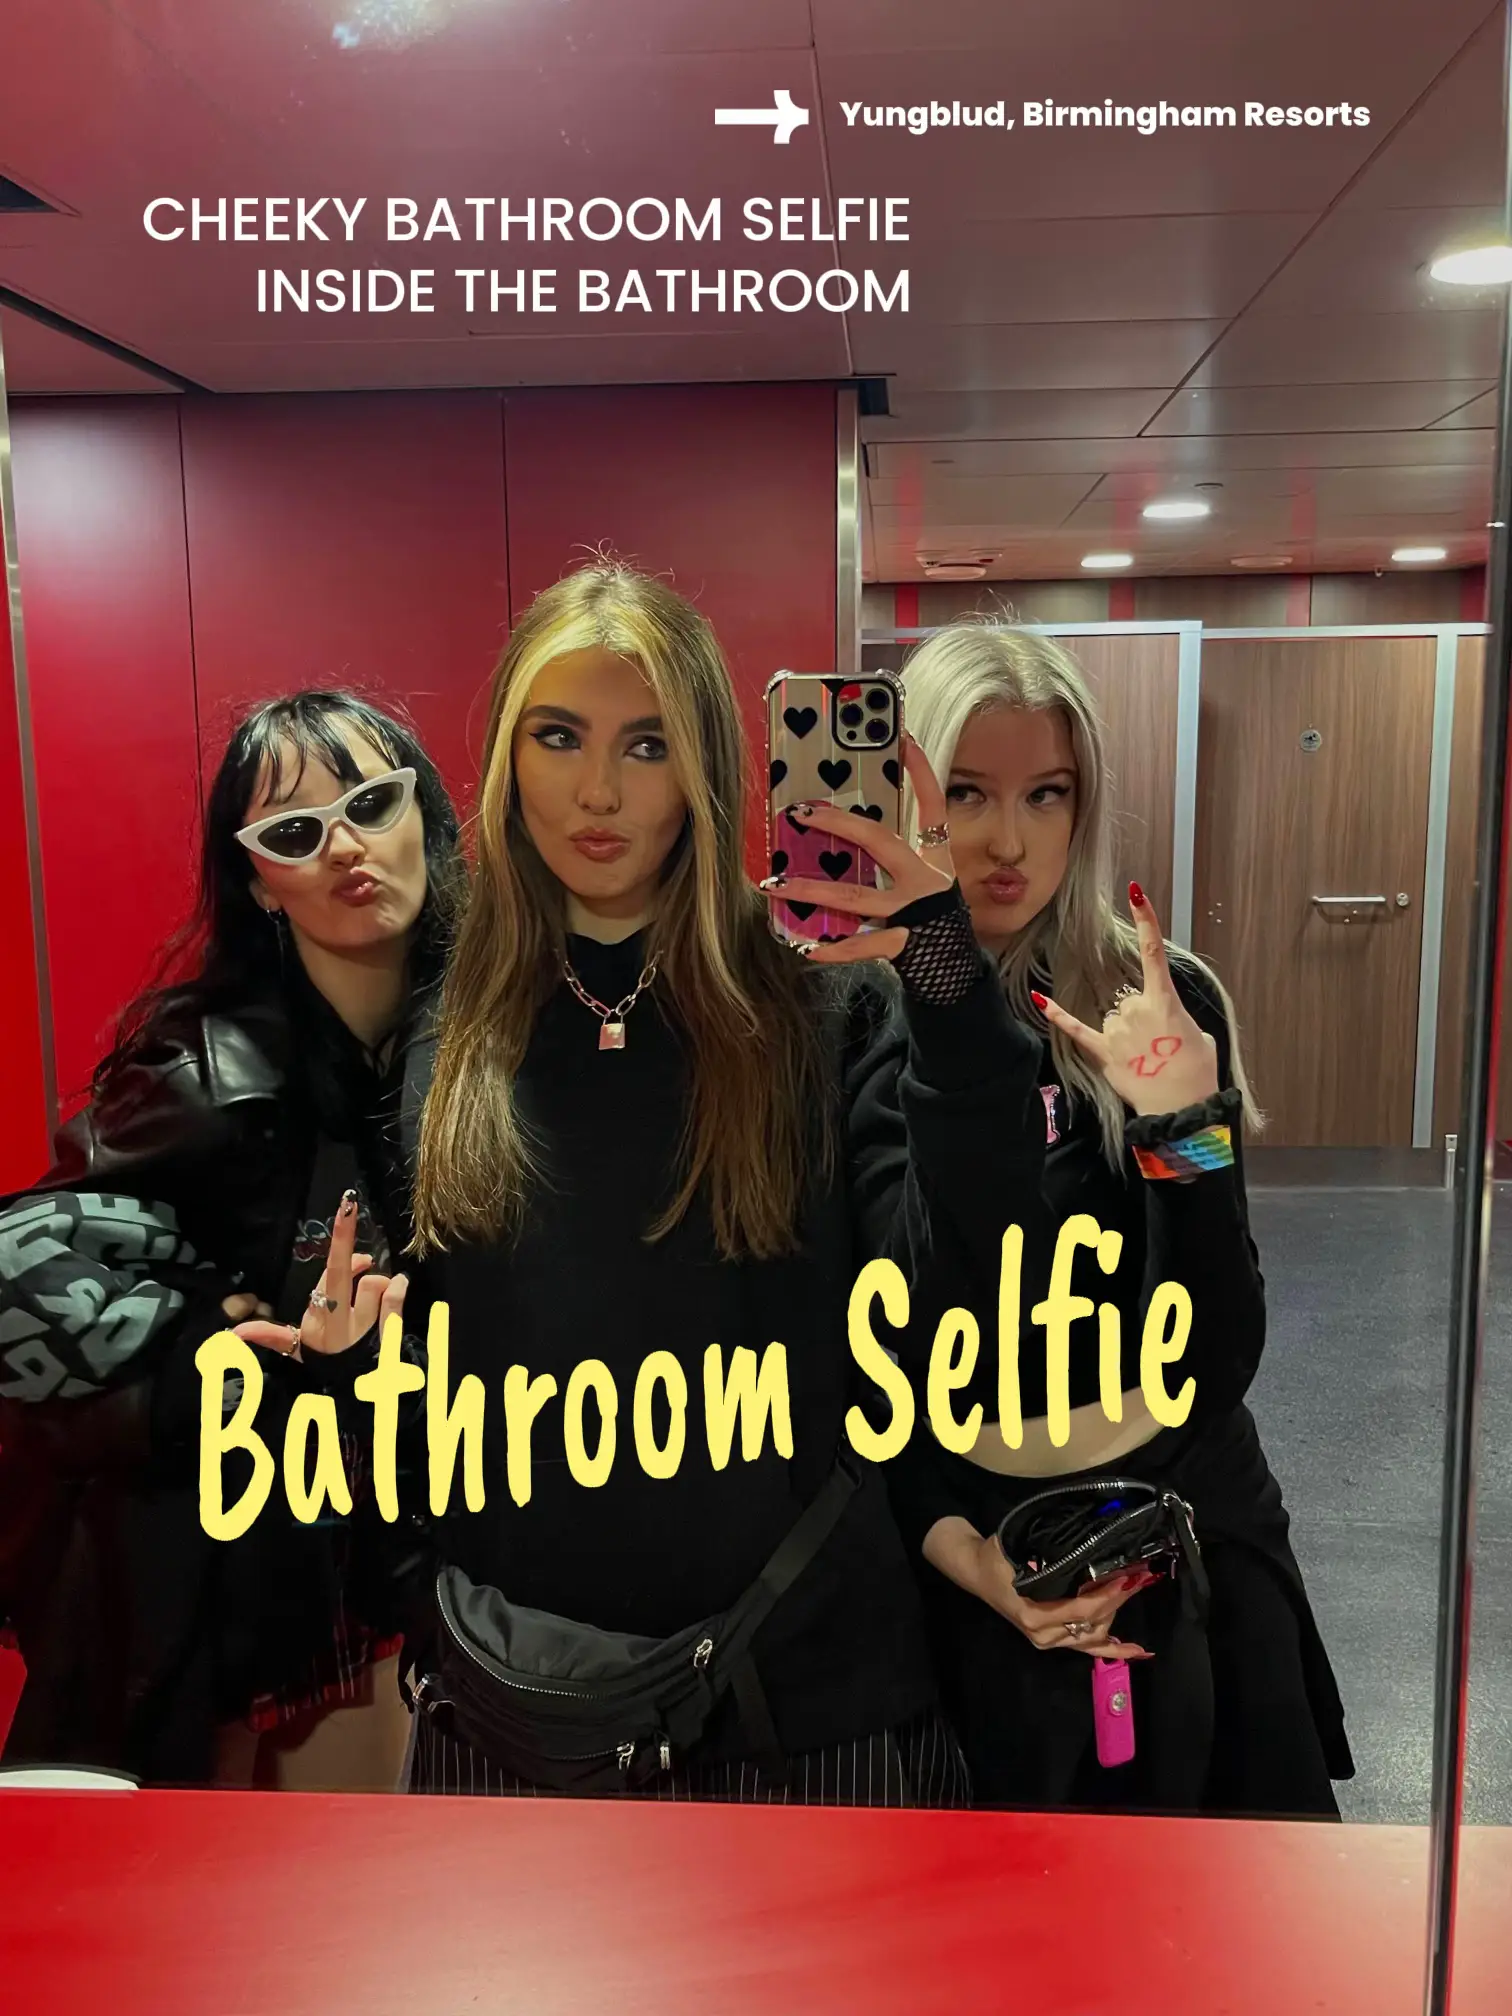  Three women are taking a selfie in a bathroom.